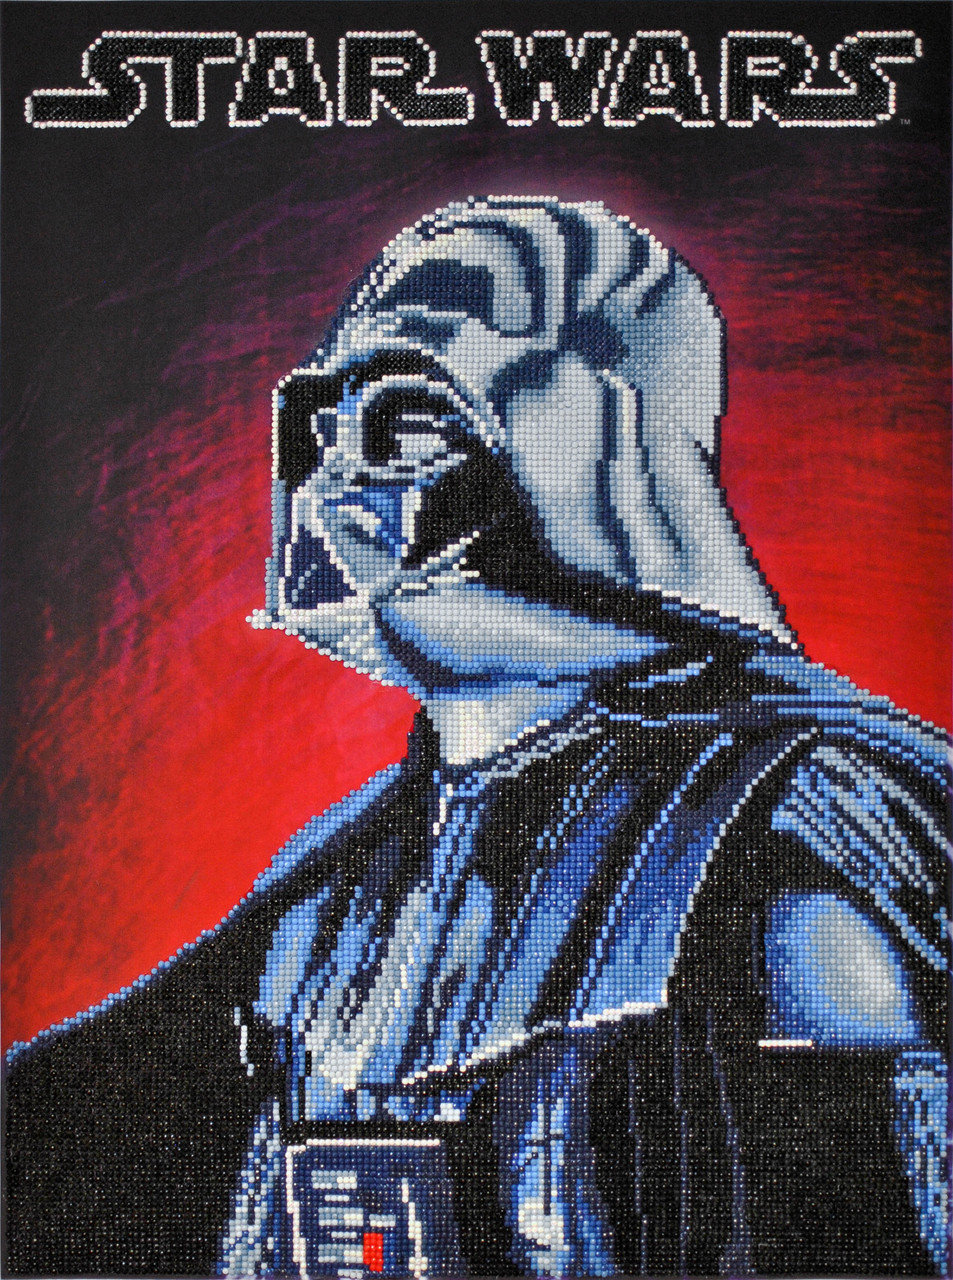 Darth Vader BLACK CANVAS Painting Kit